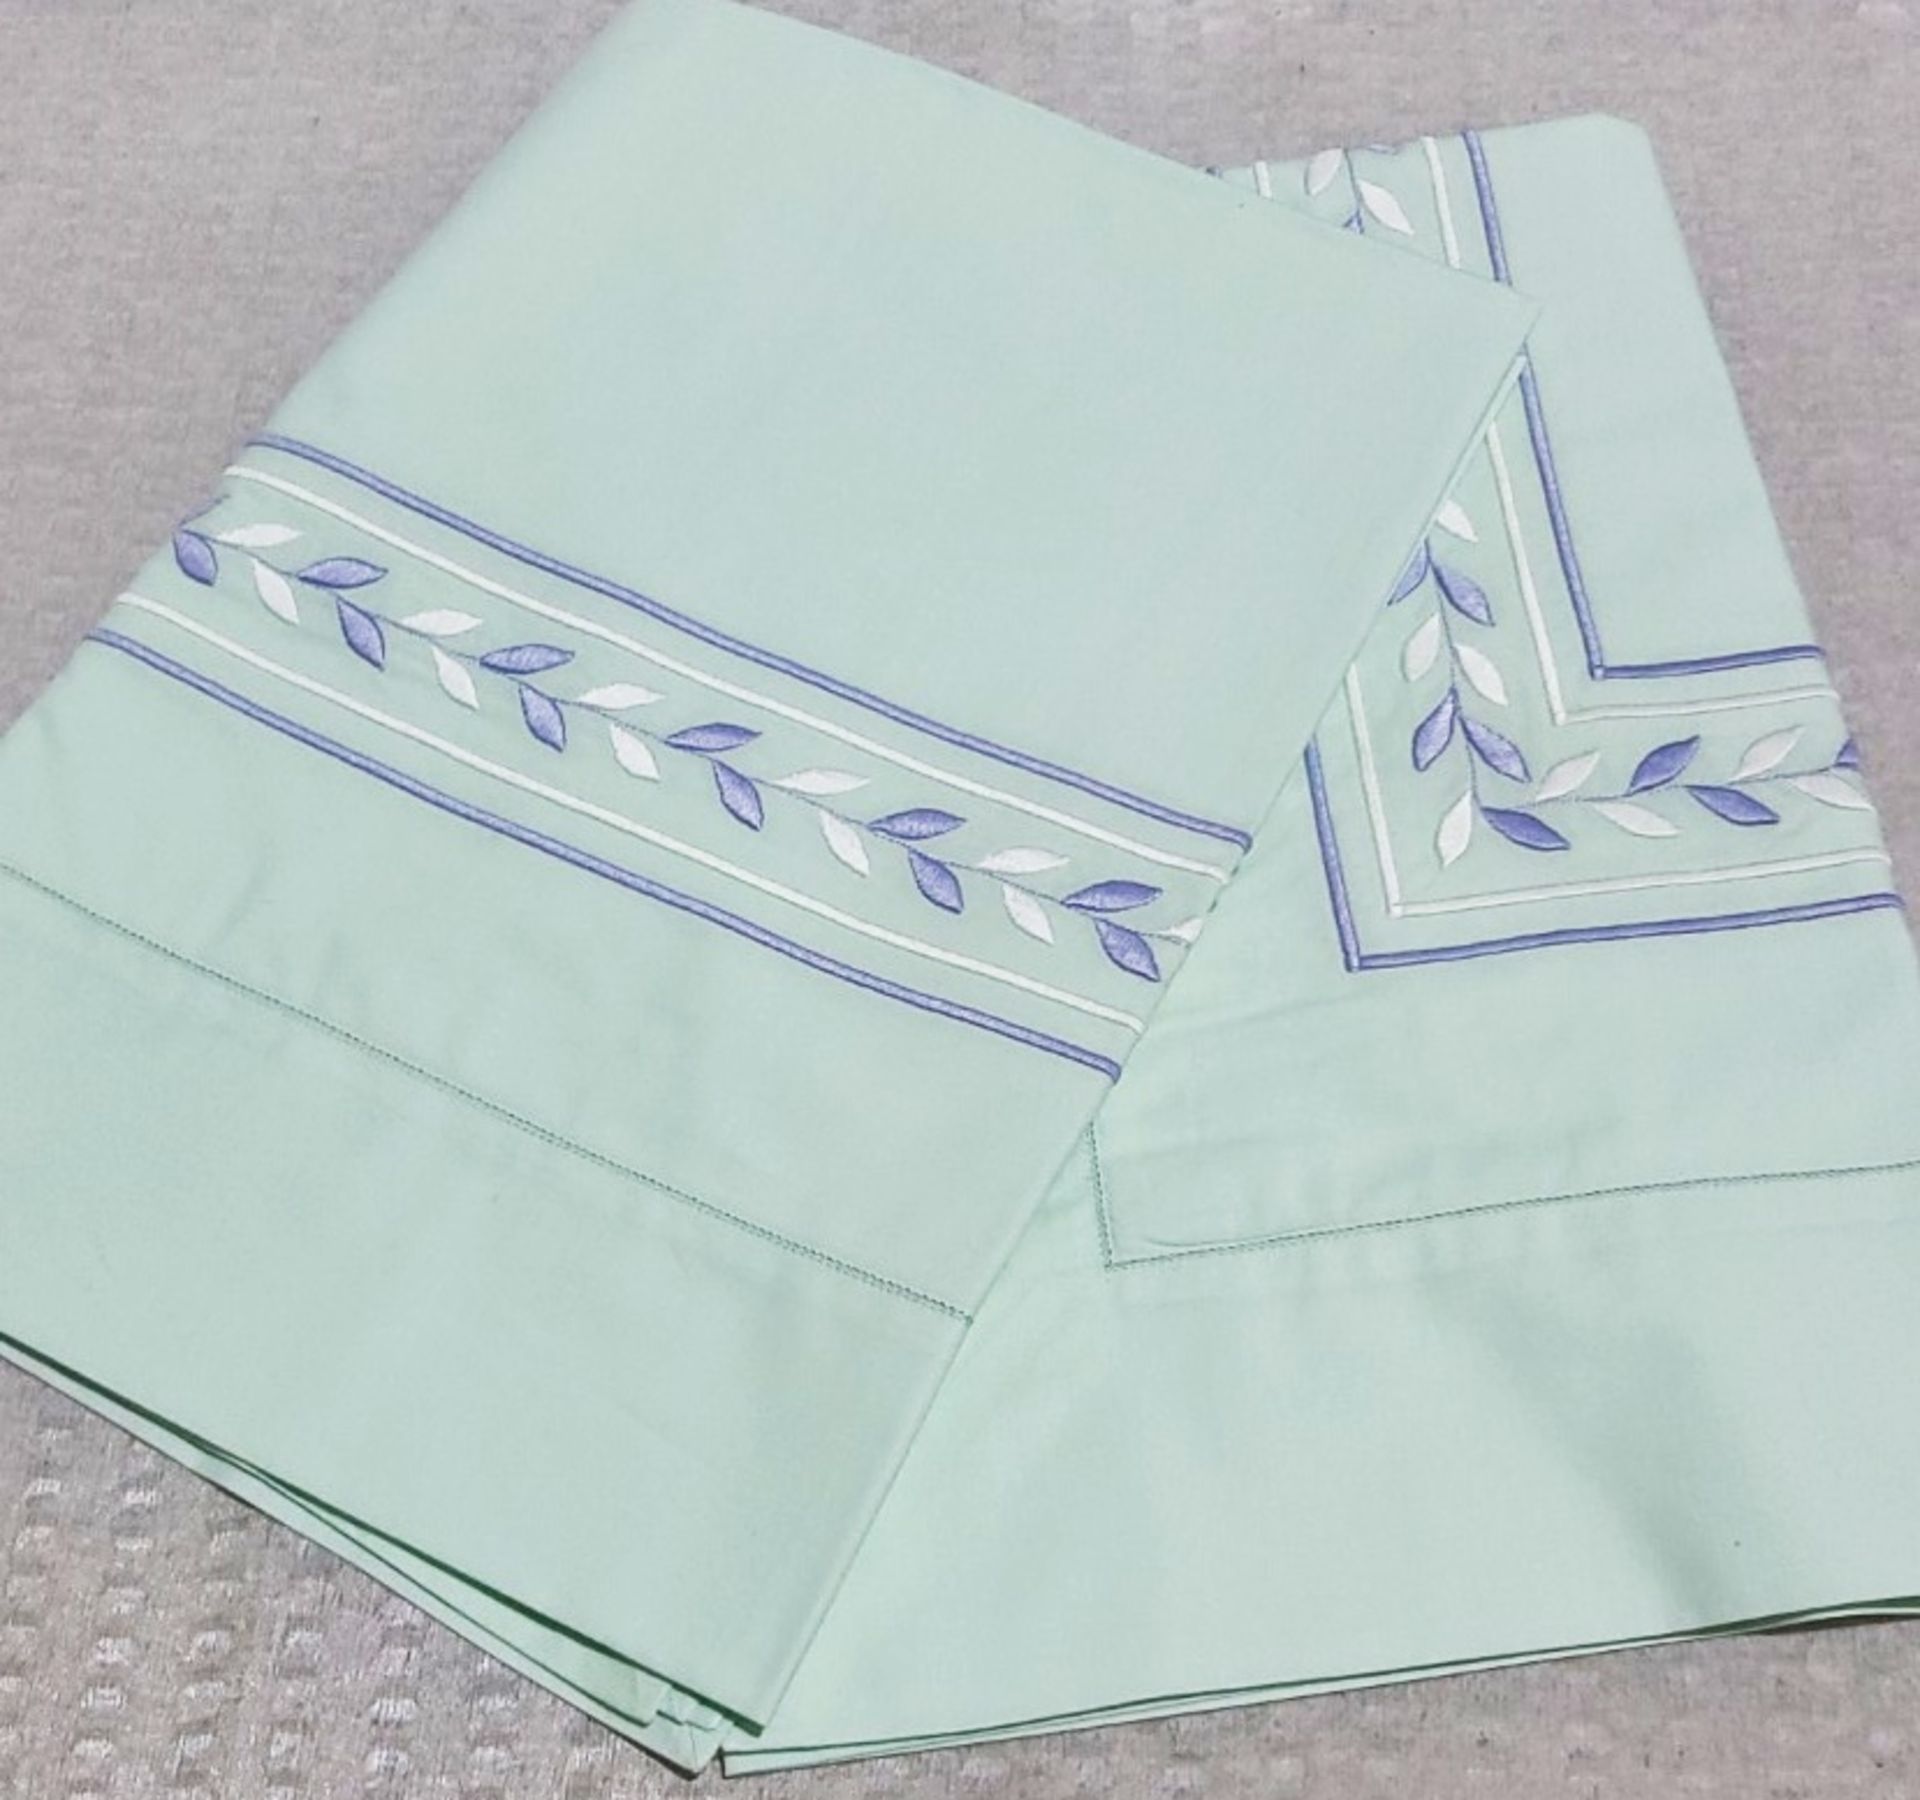 Set of 2 x PRATESI 'Impero' Blue & White Embroidered & Hem Stitched Teal Pillow Shams - Image 3 of 4